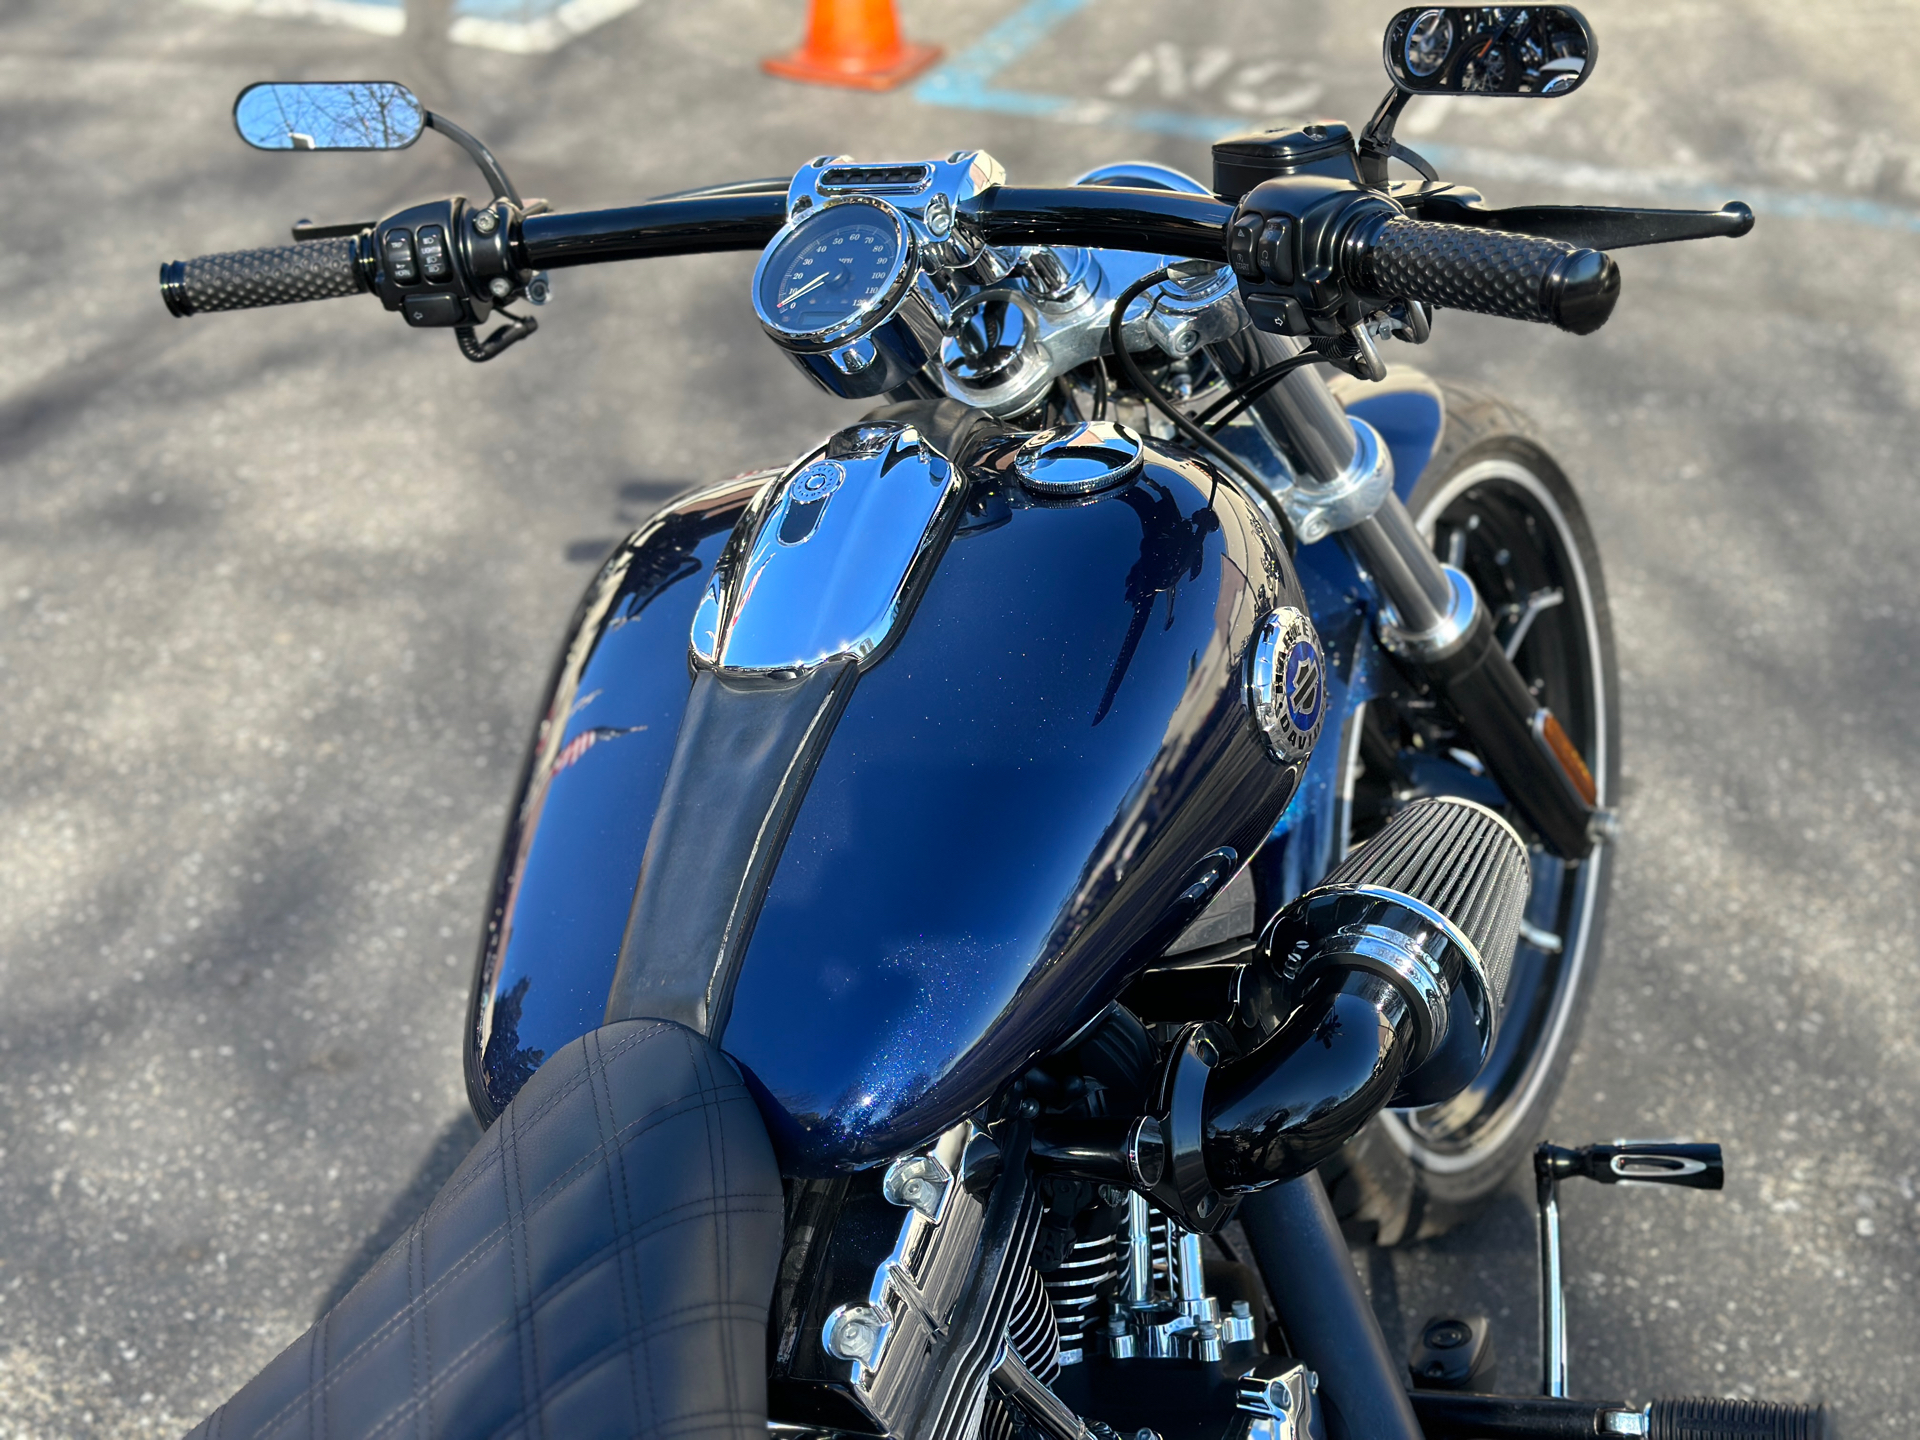 2013 Harley-Davidson Softail® Breakout® in San Jose, California - Photo 7